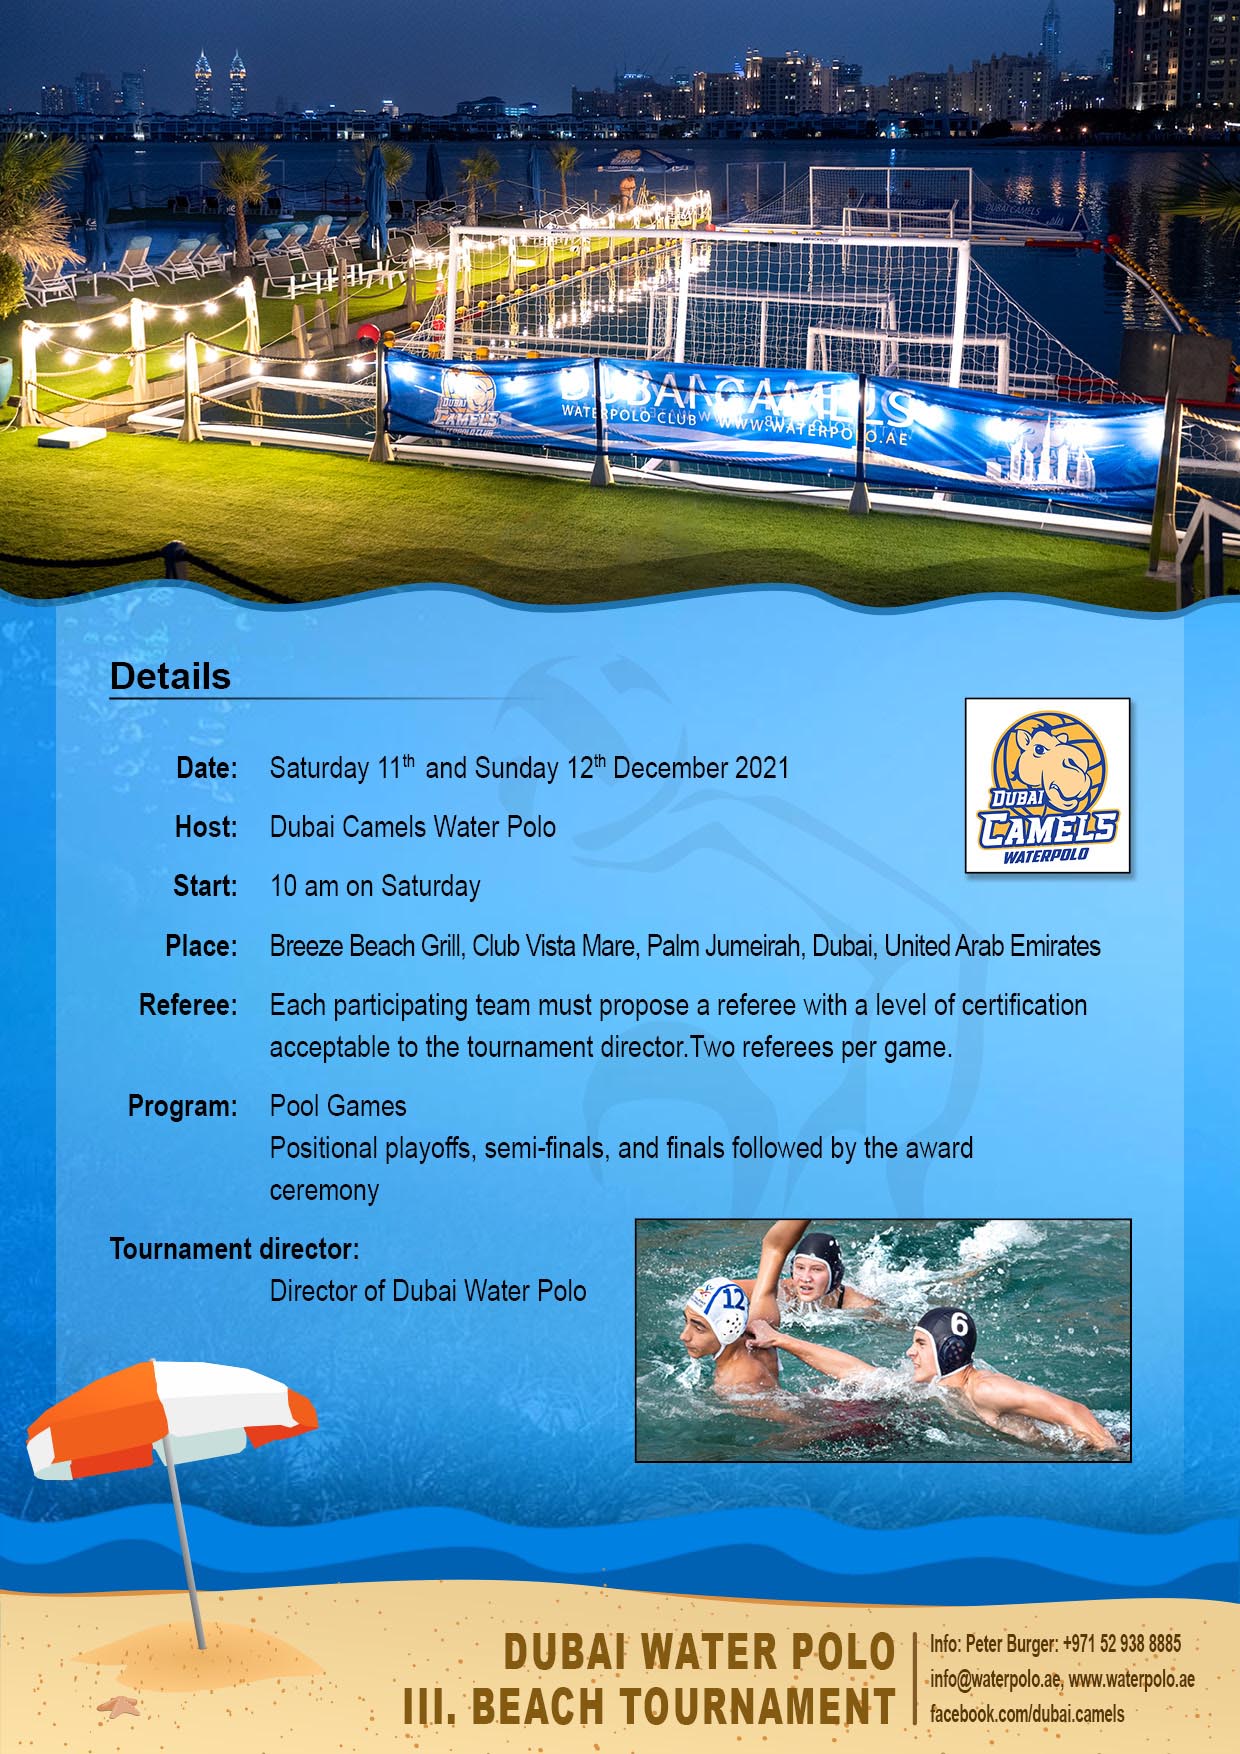 Beach Water Polo Tournament 11 December 2021